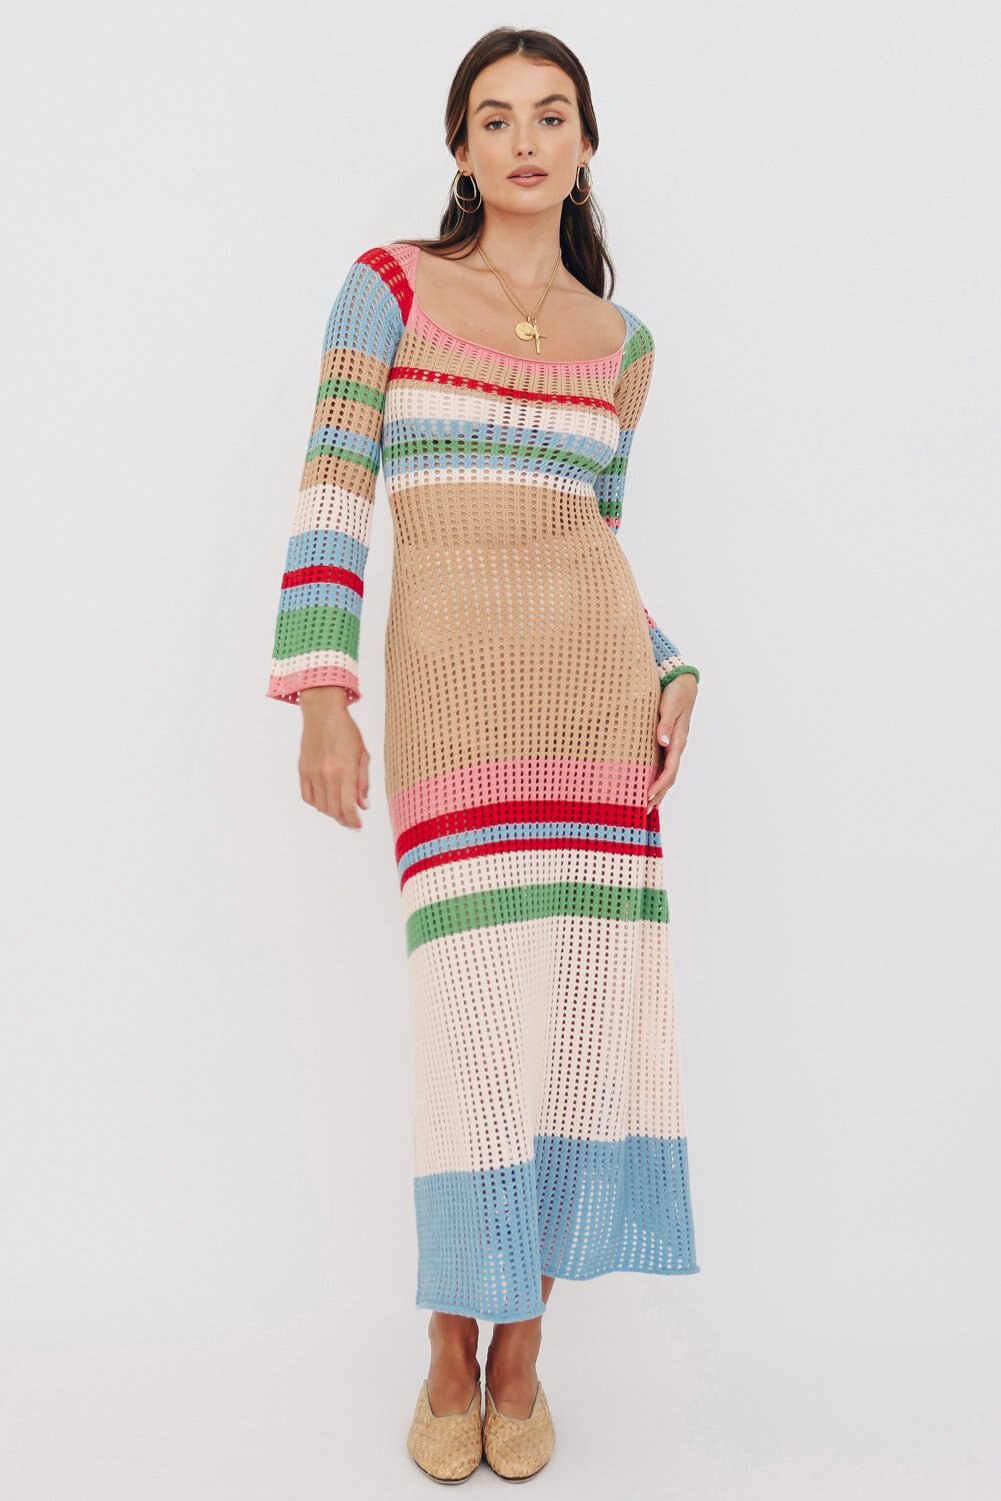 Cinessd  Women Casual Knitting Long Dress Long Sleeve See-Through Mesh Loose Striped Slimming Fall Summer Midi Hollow Dress